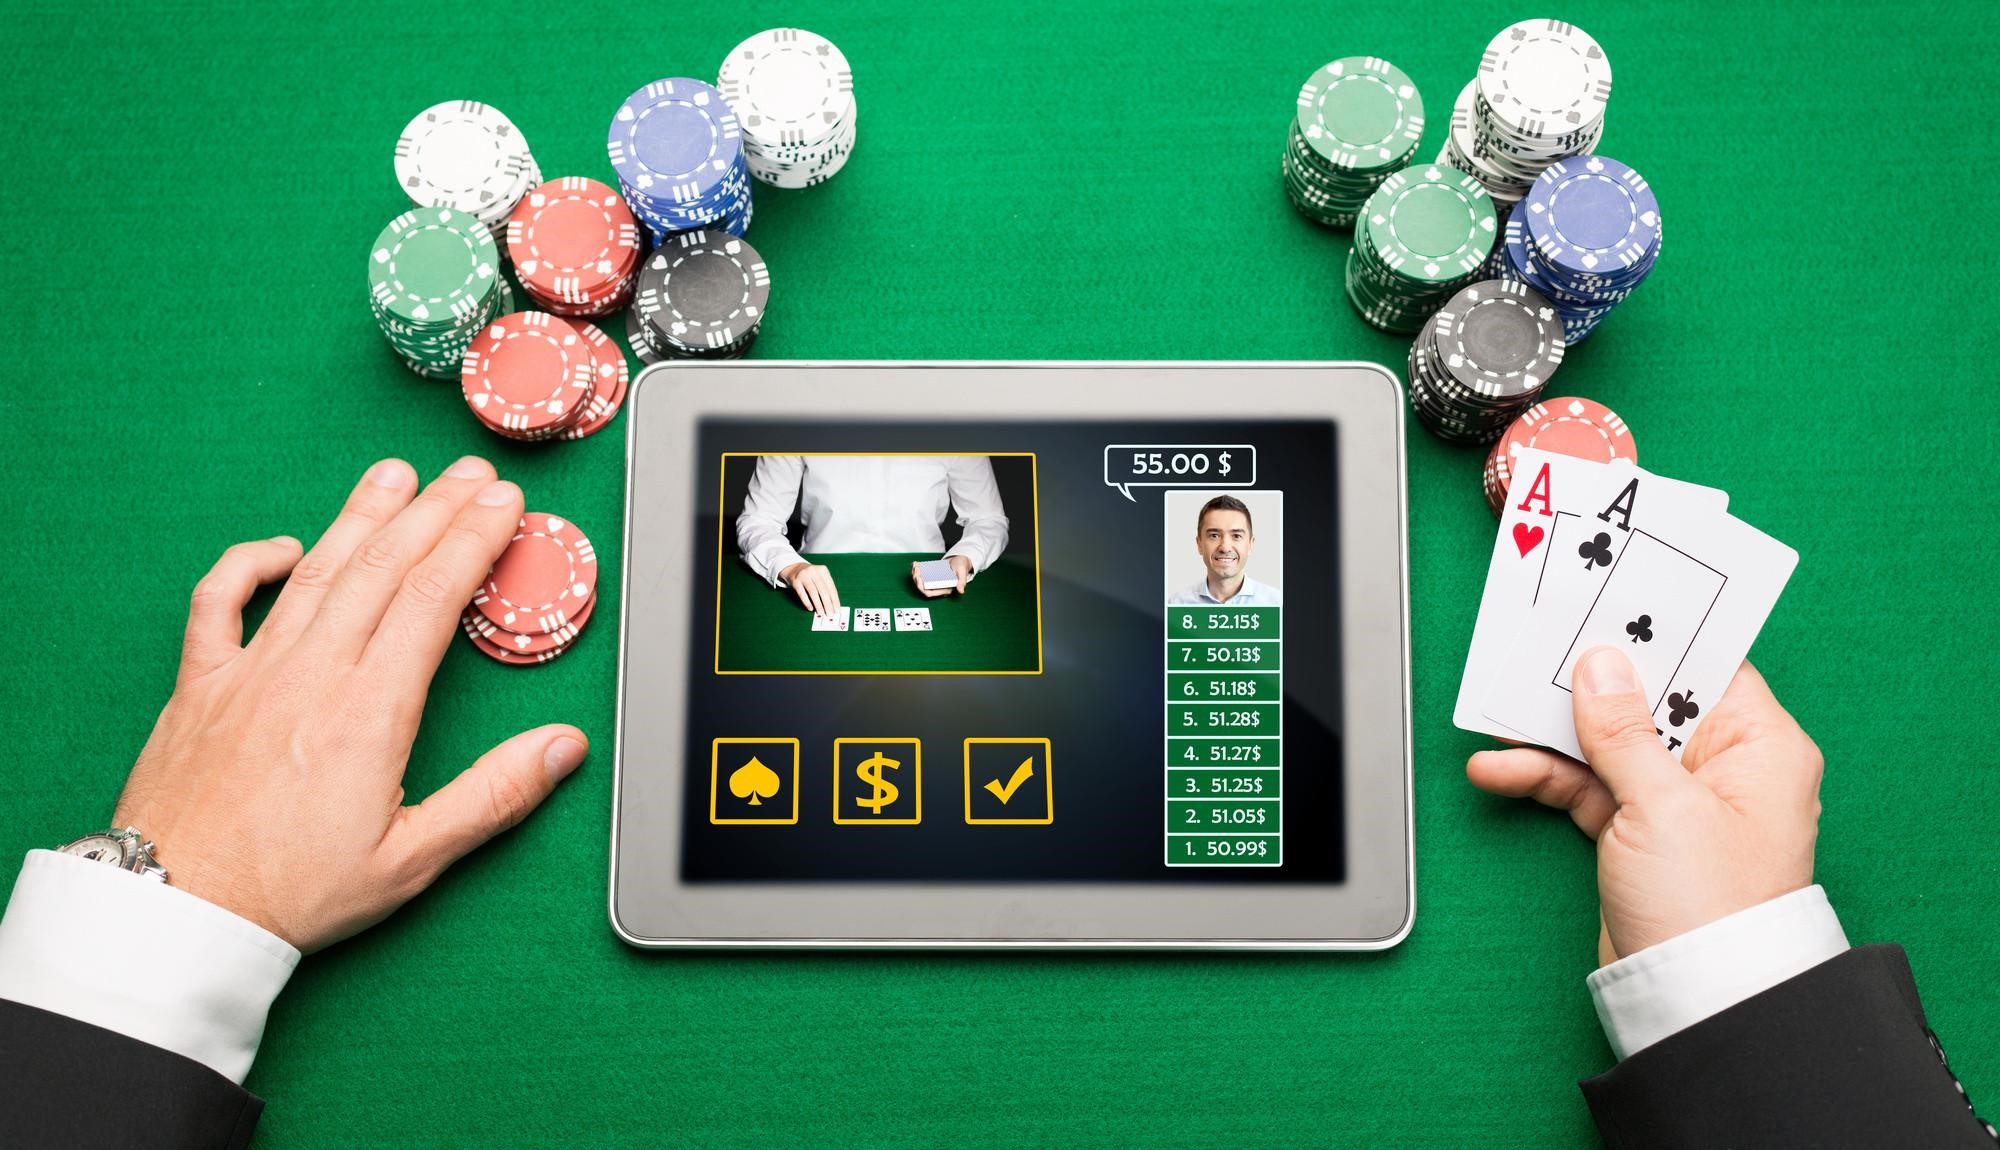 How to Find the Best Real Money Online Casino - VideoGamesRepublic.com